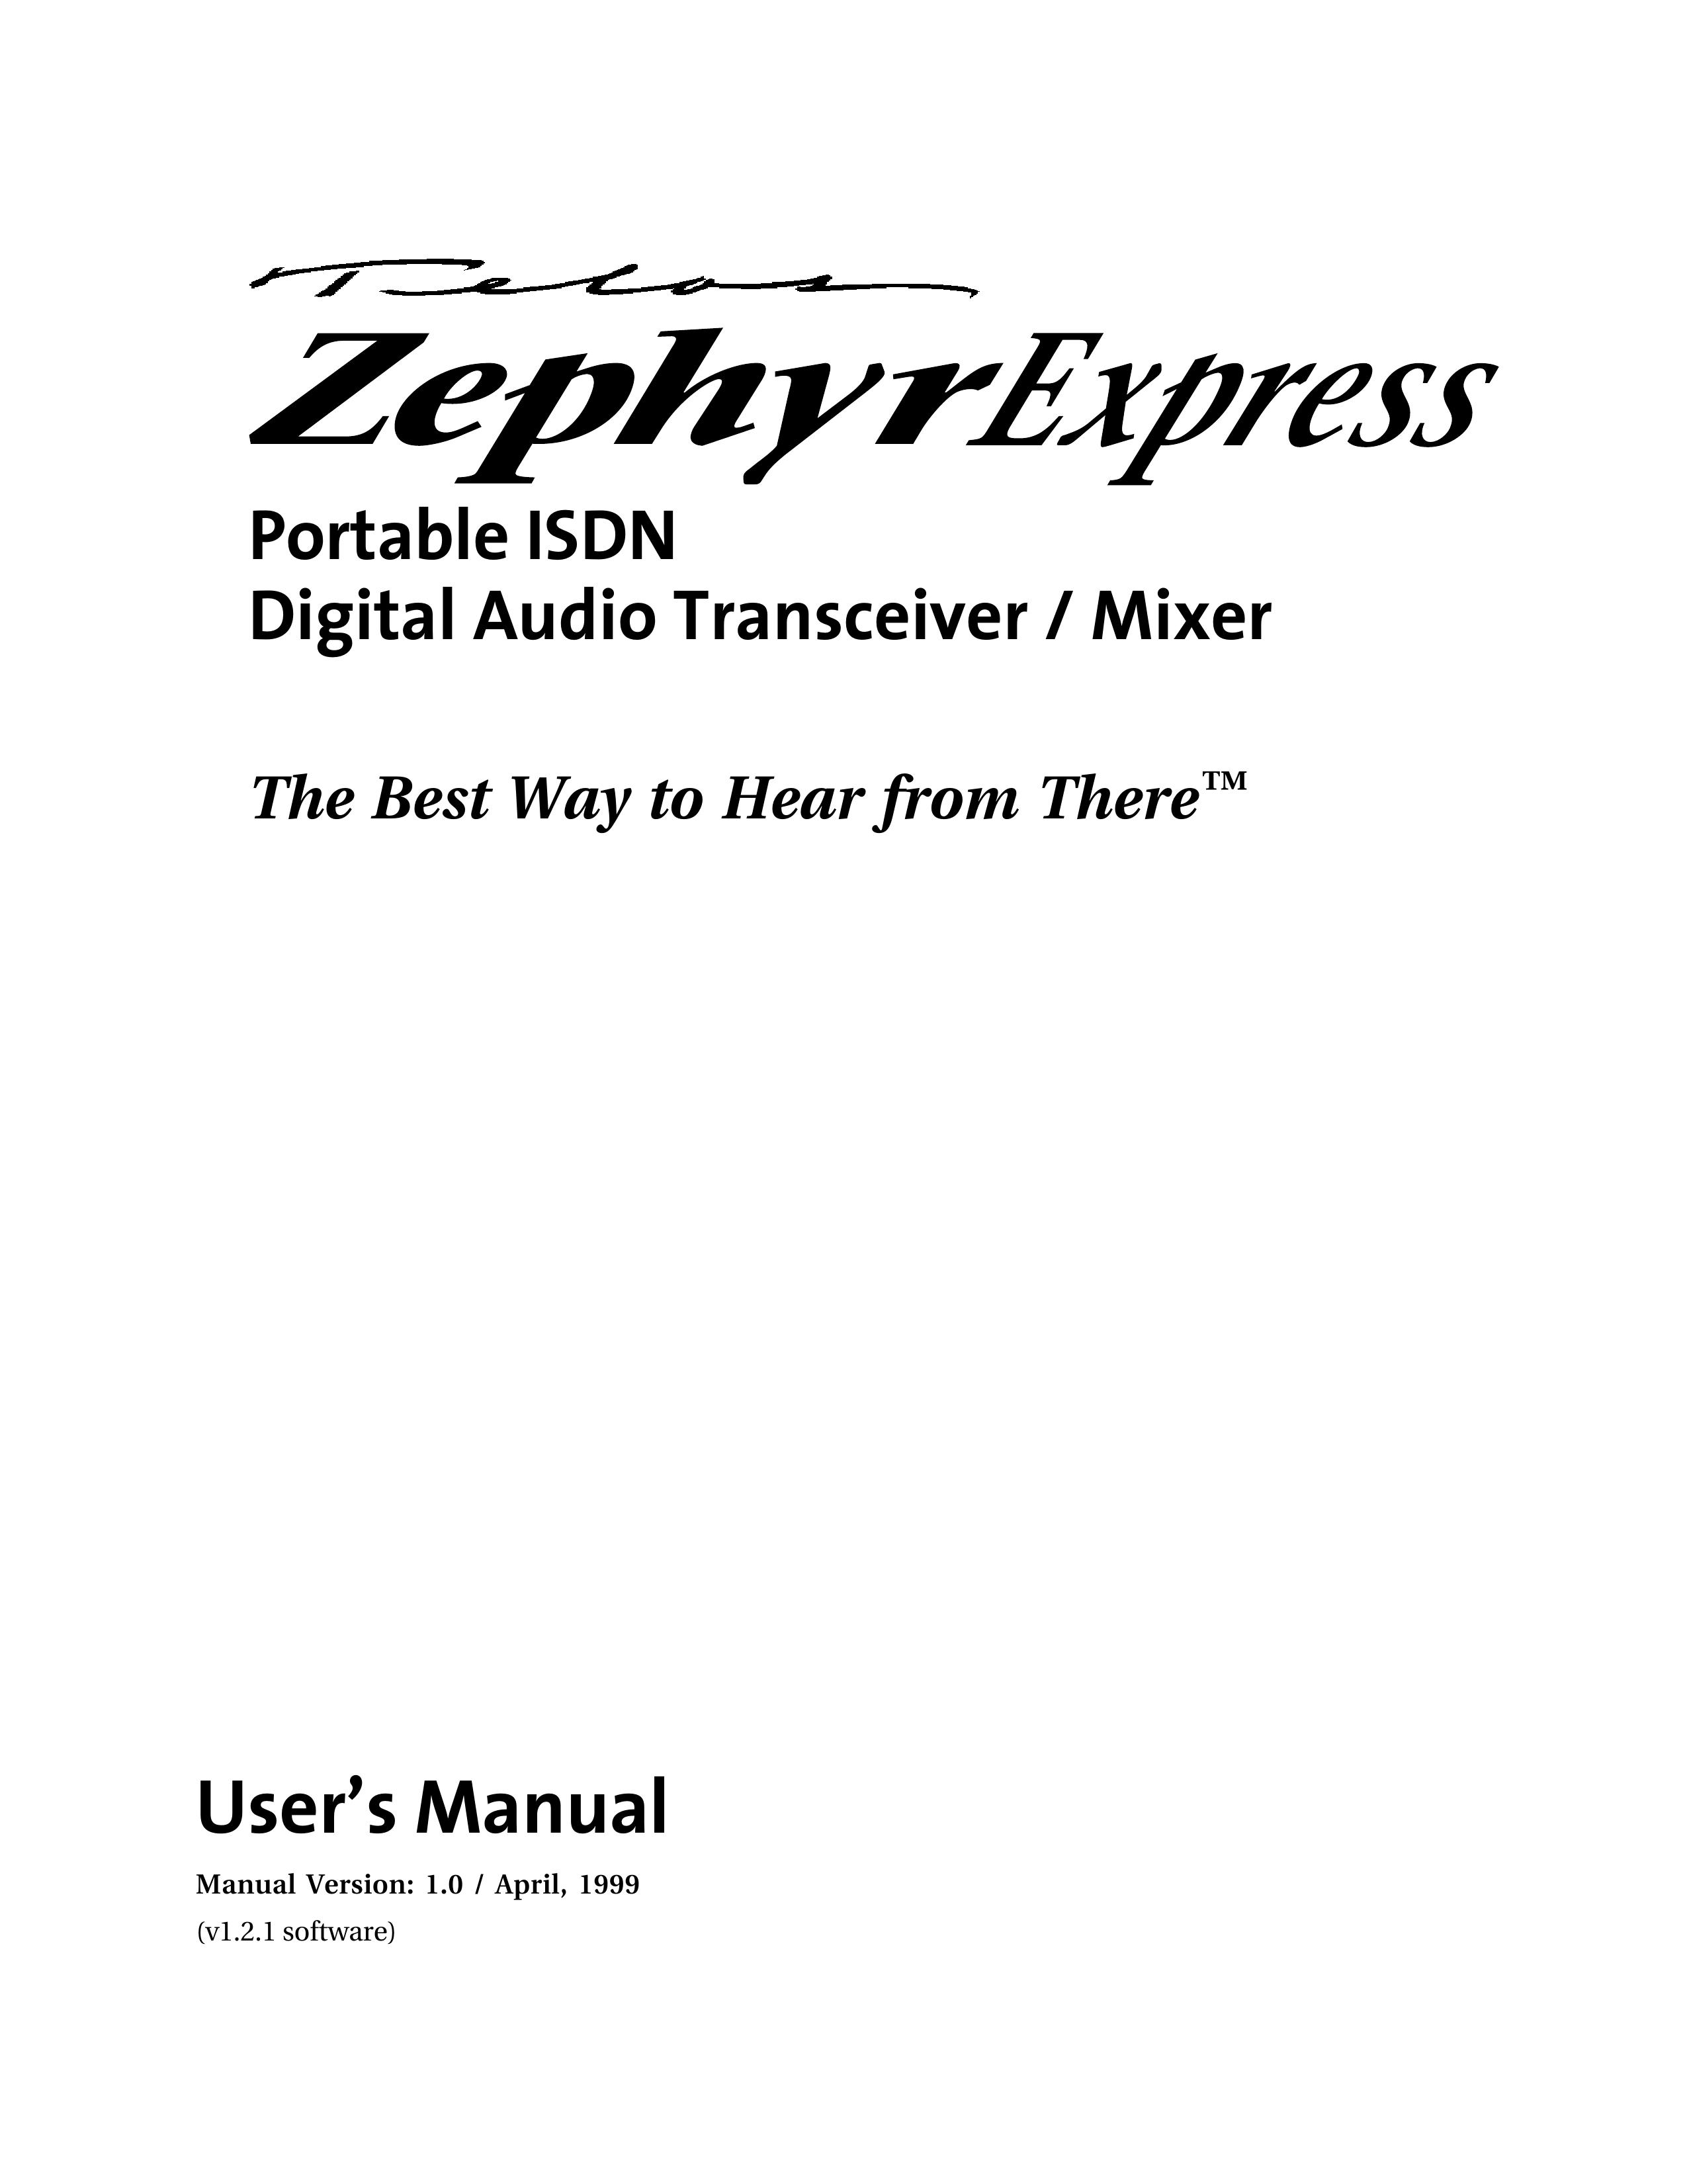 Telos ZephyrExpress Music Mixer User Manual